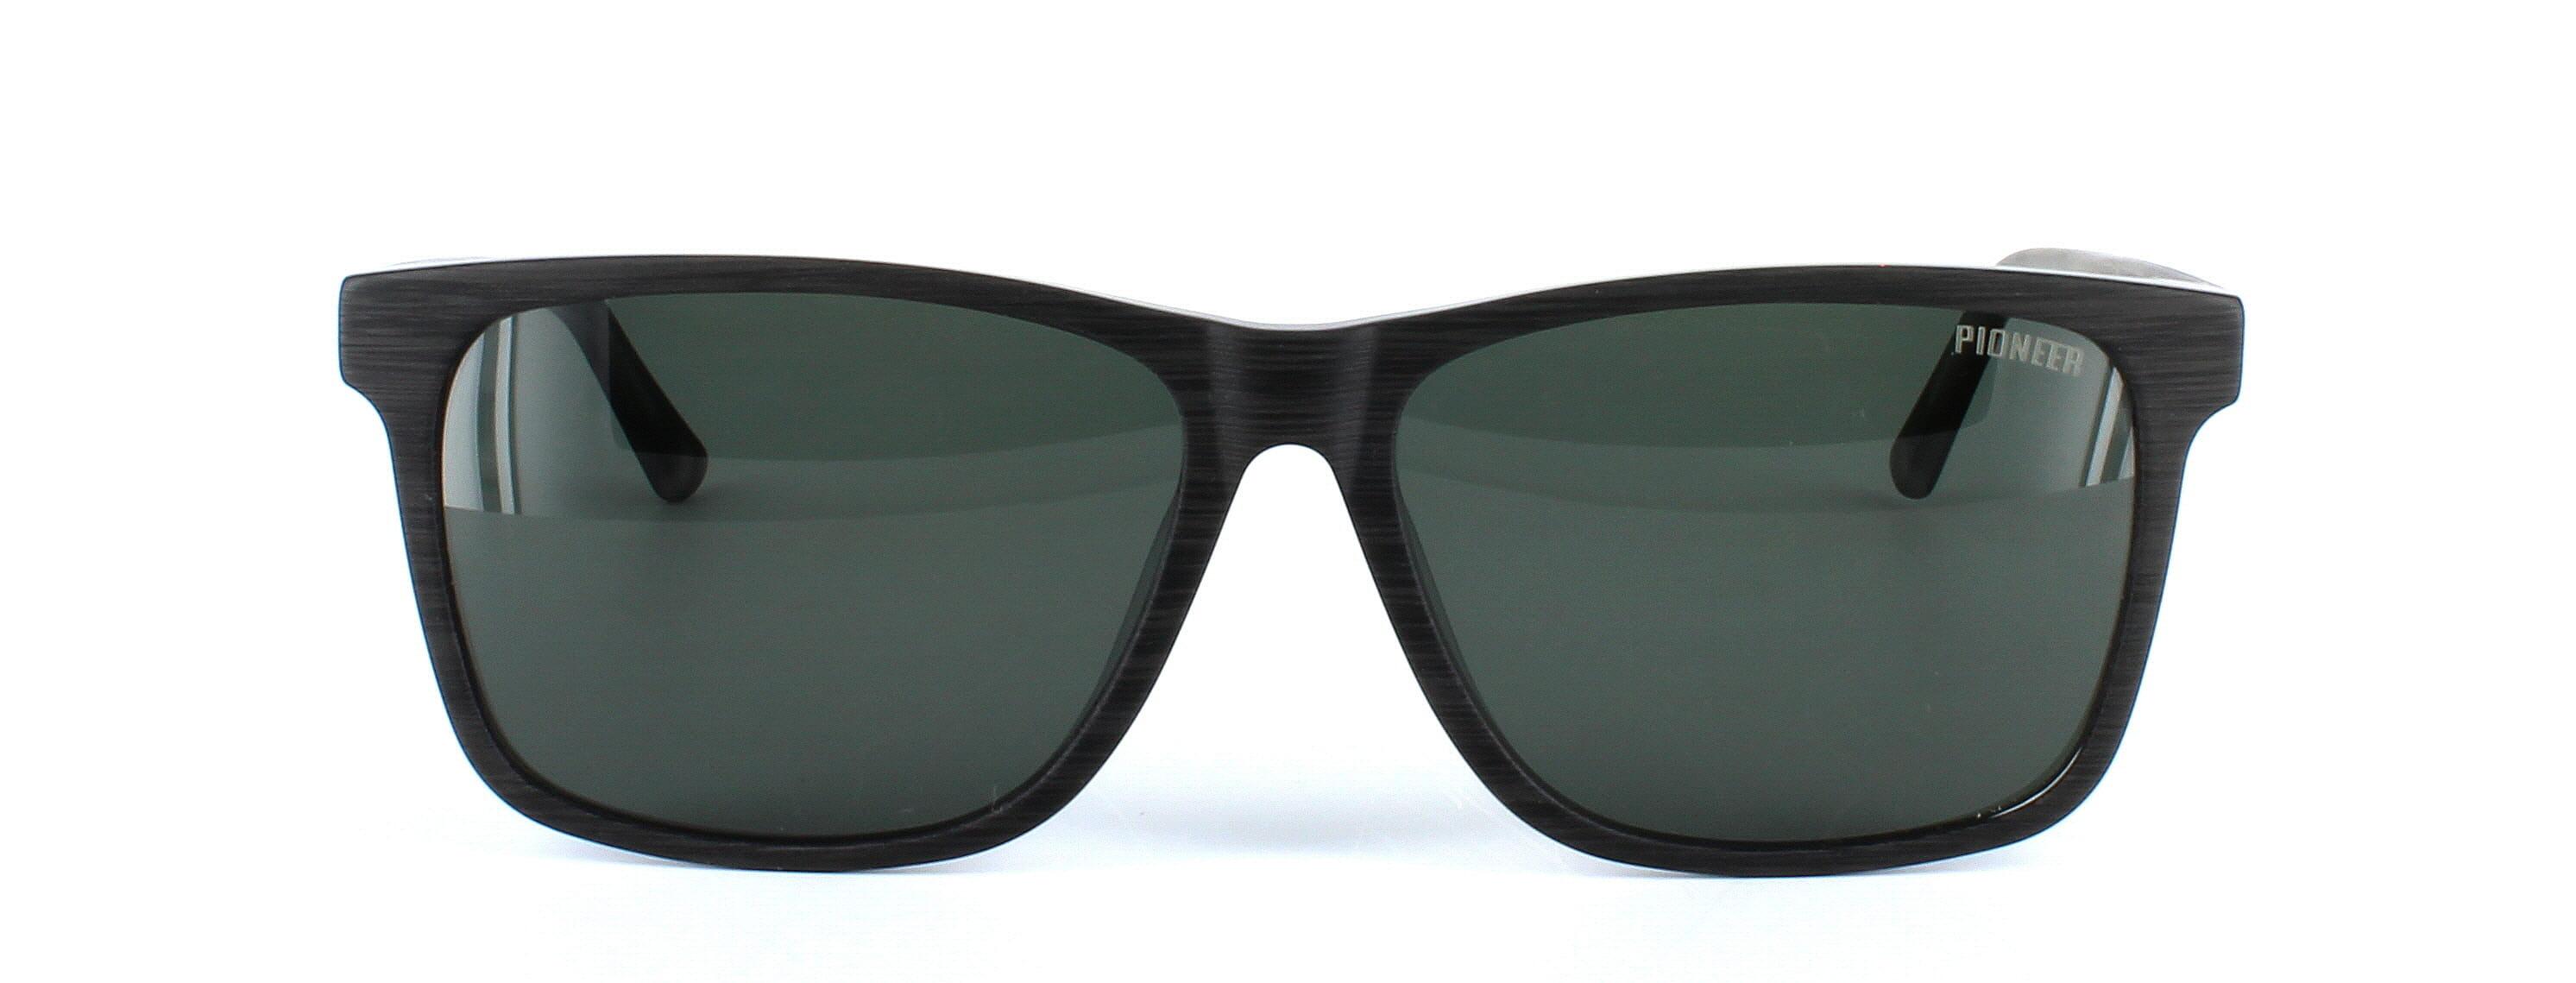 Angelo - unisex plastic sunglasses here in matt brown - image view 5